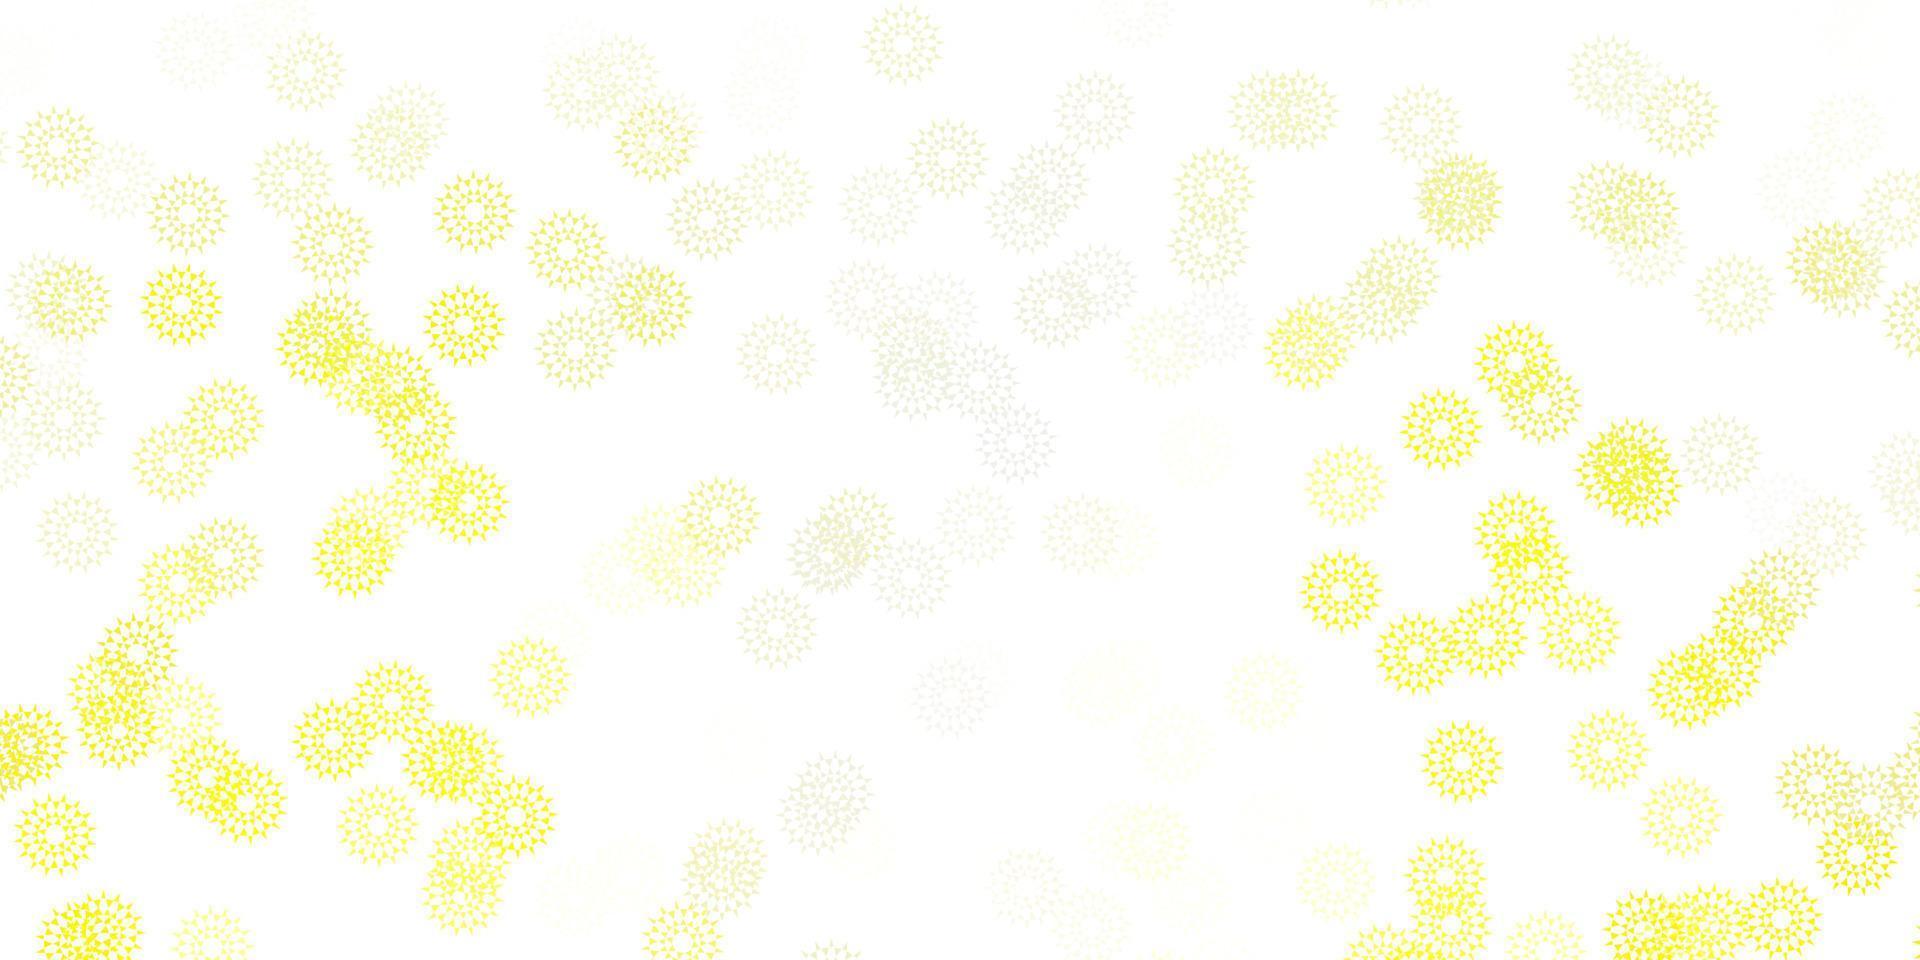 ljusgul vektor doodle textur med blommor.